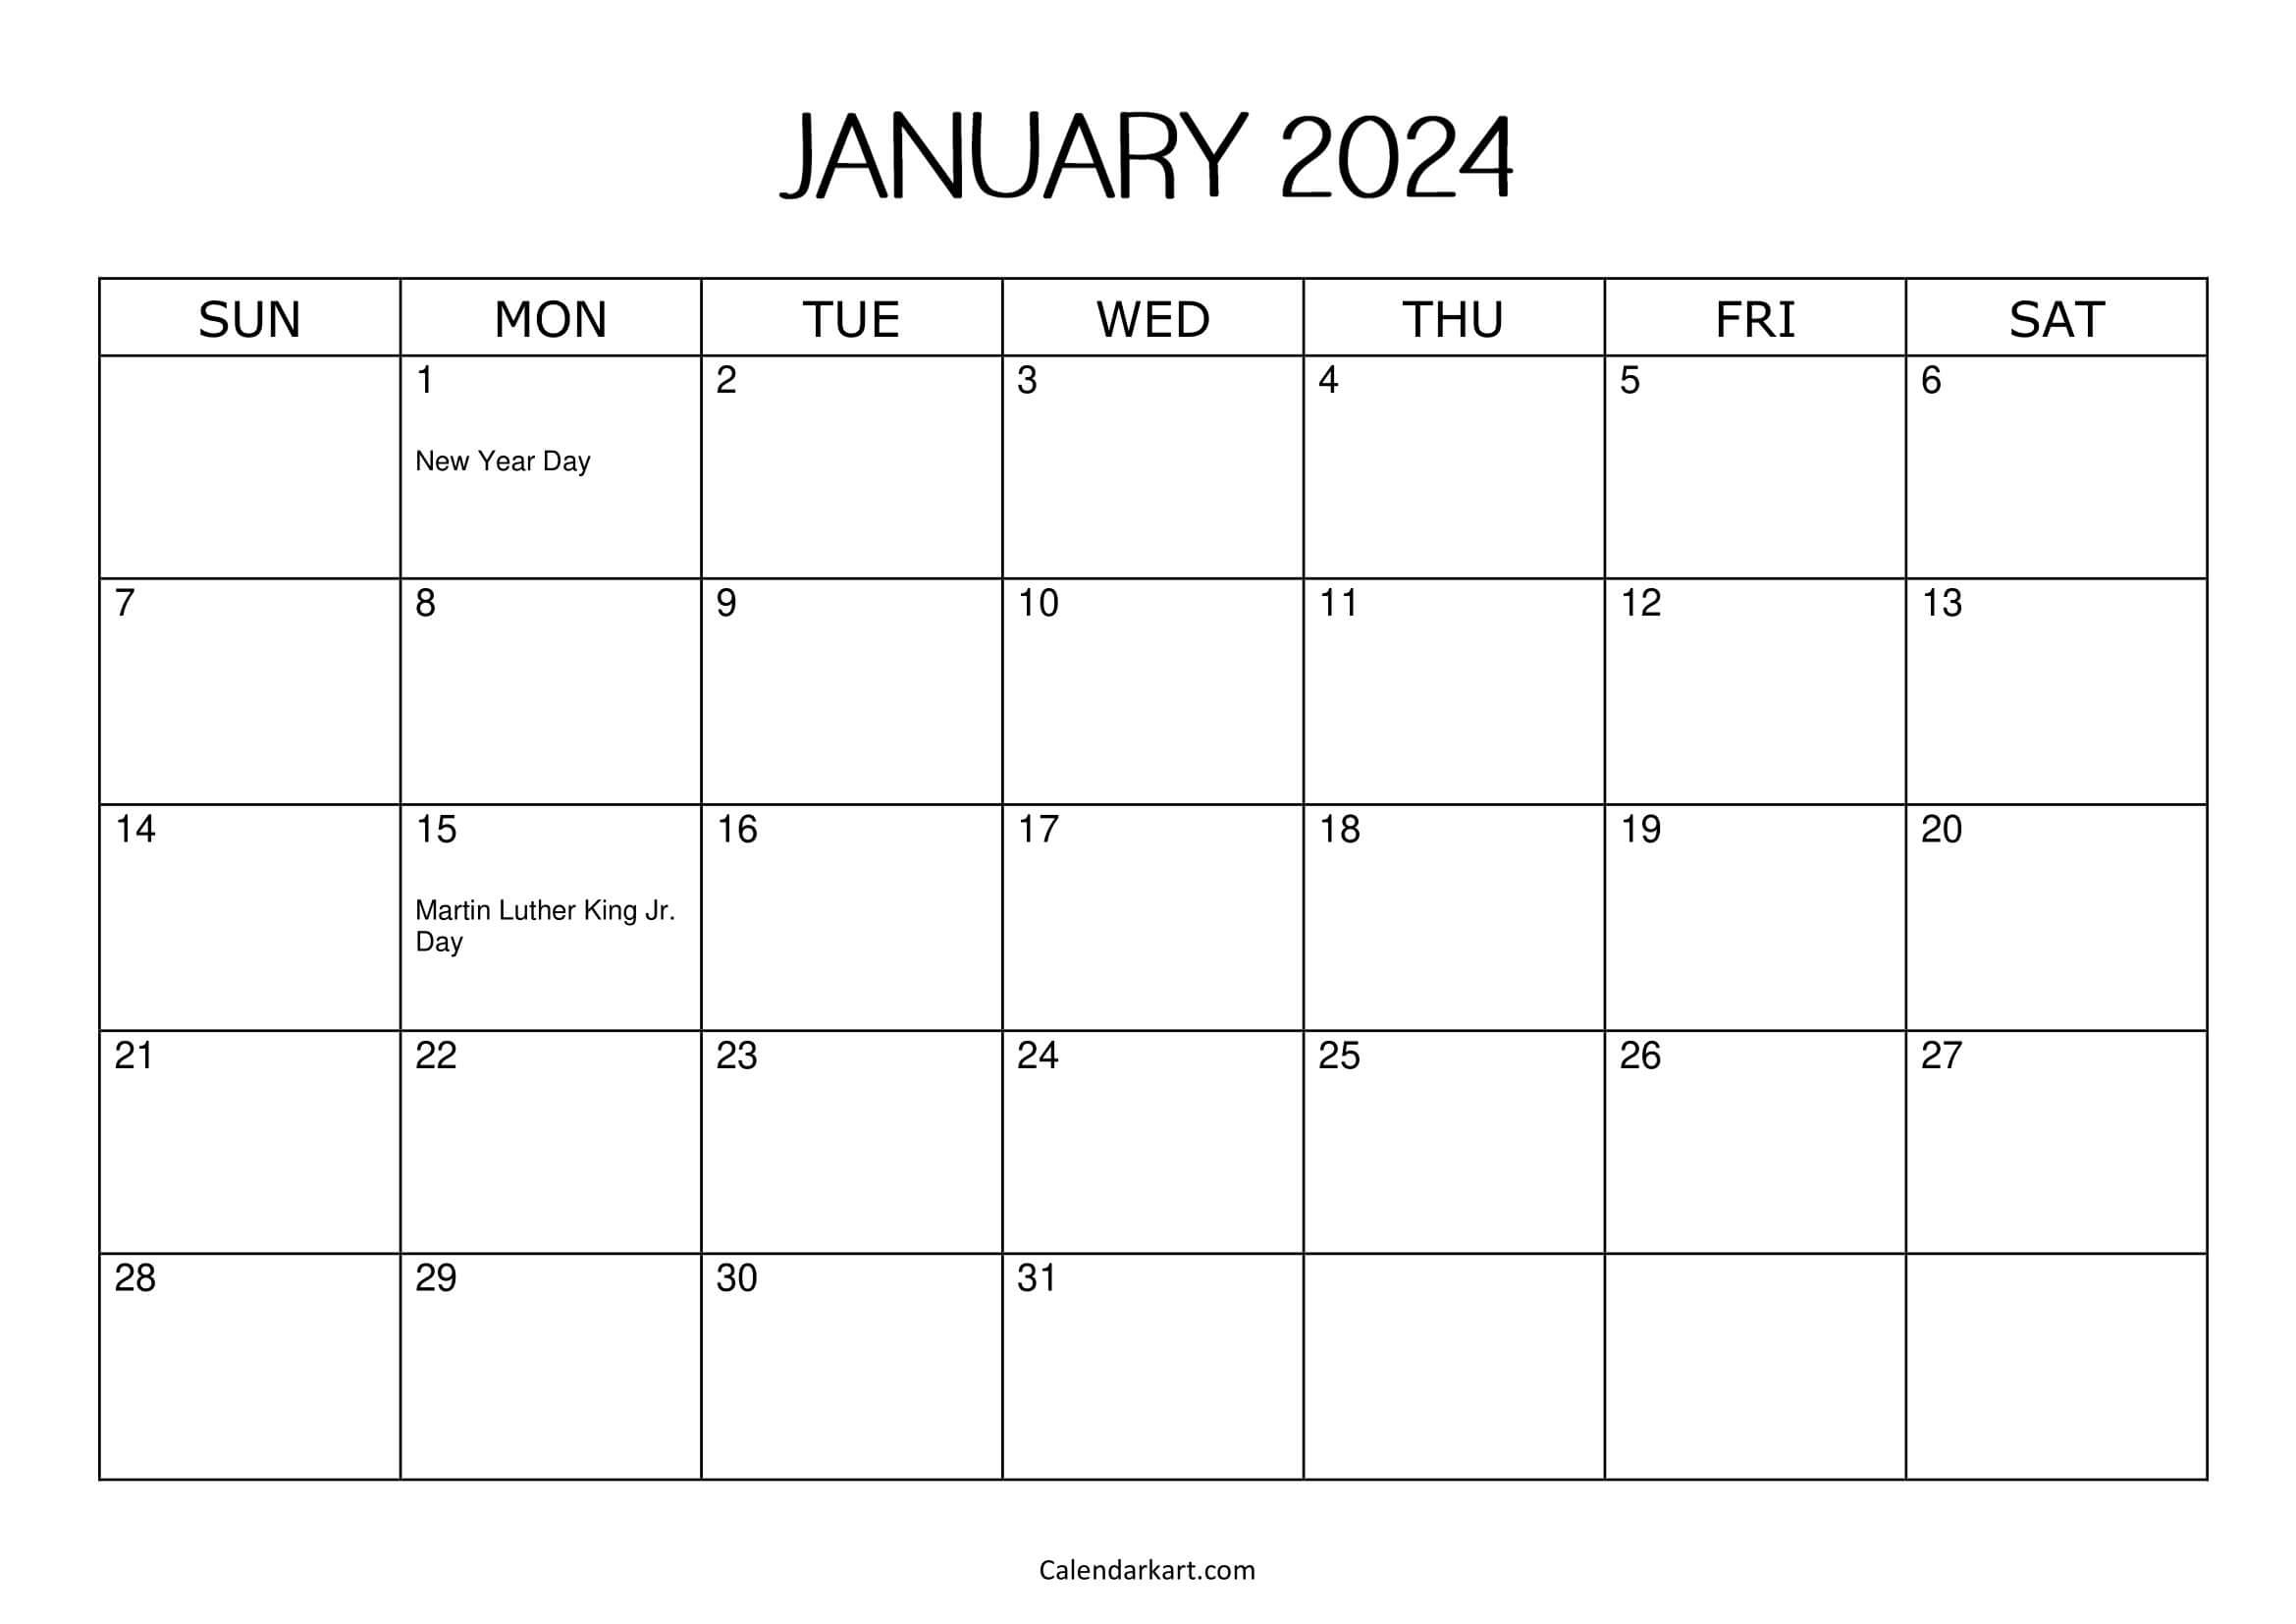 Free Printable January 2024 Calendars - Calendarkart | Printable Calendar 2024 Monthly Hp